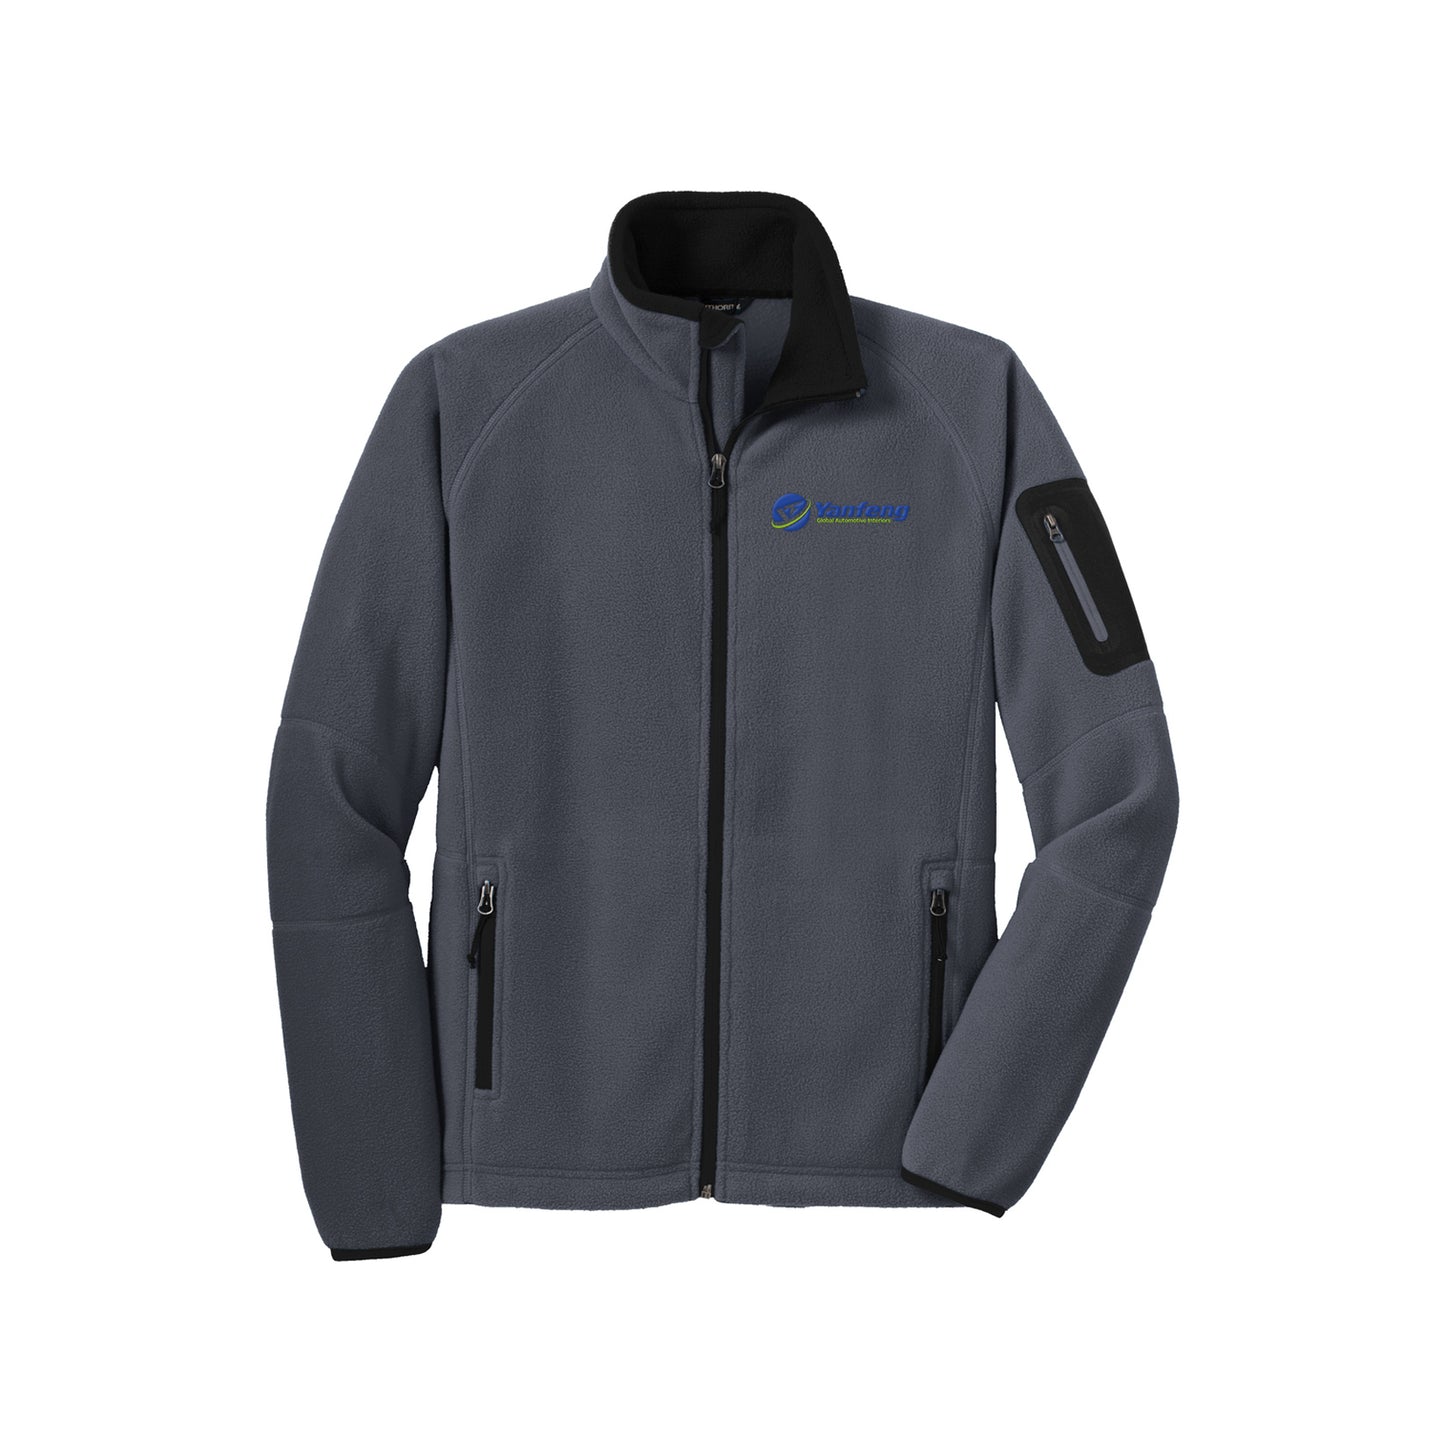 Yanfeng | Enhanced Value Fleece Full-Zip Jacket